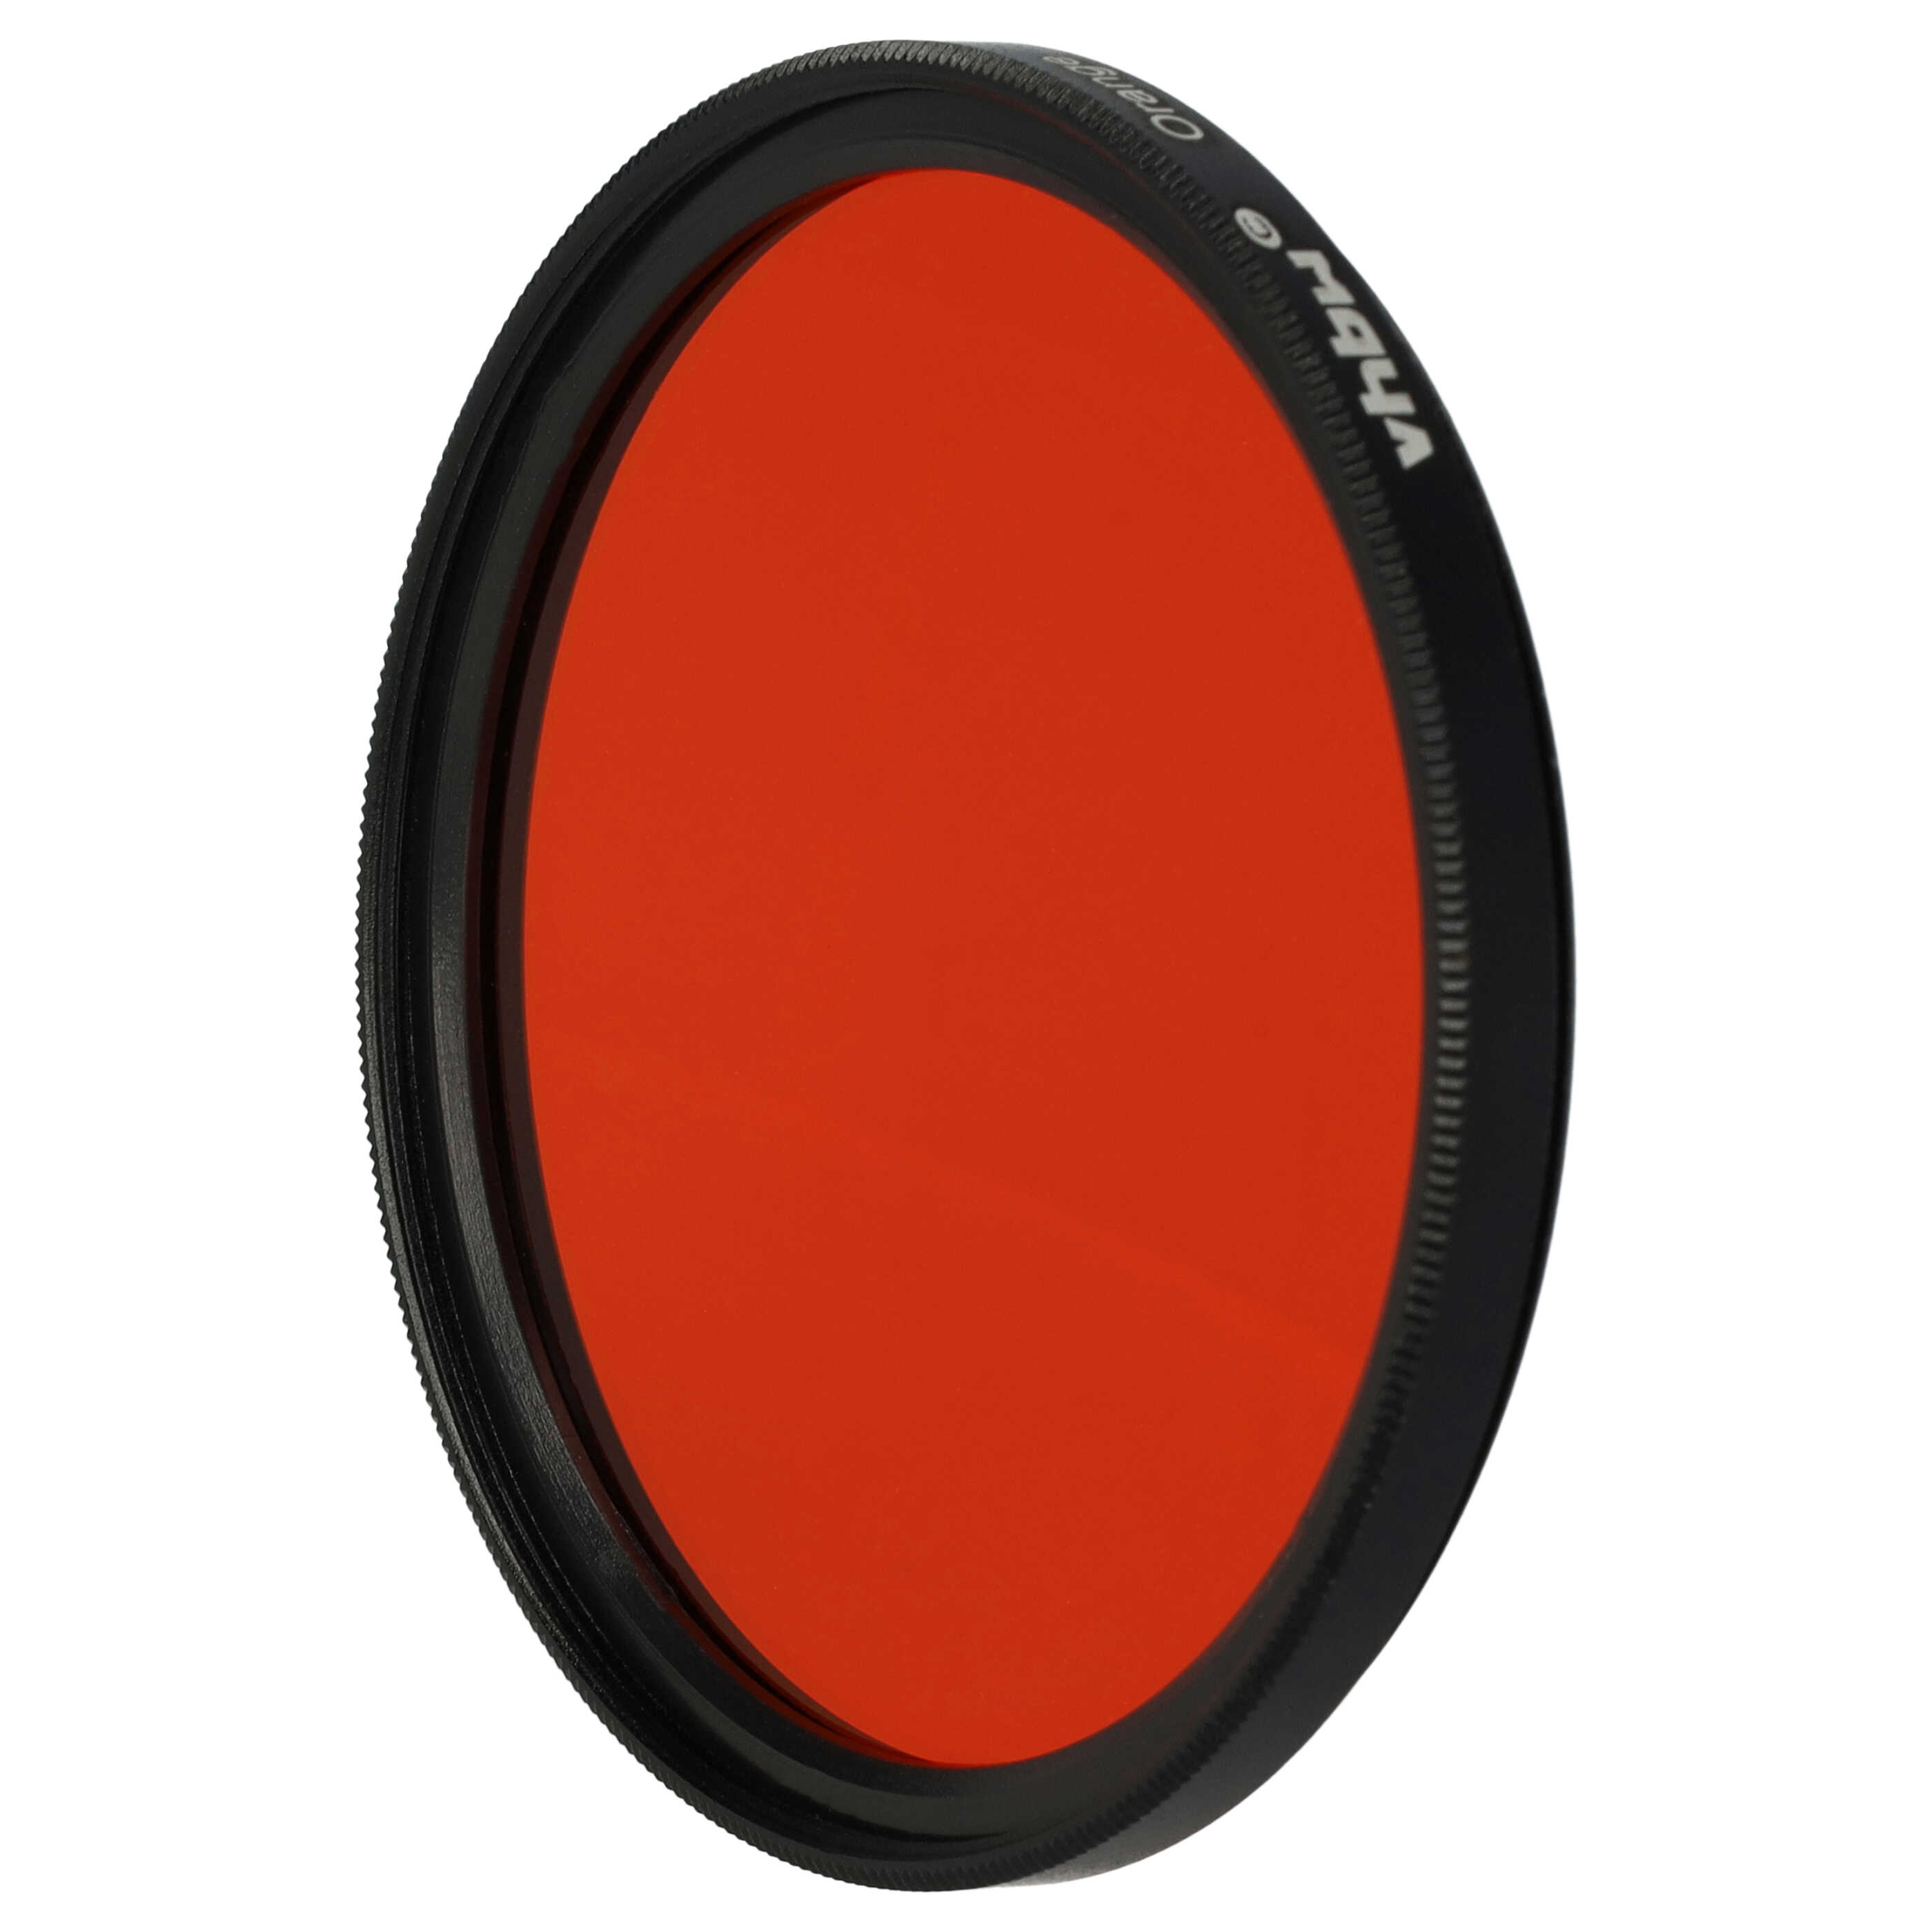 Coloured Filter, Orange suitable for Camera Lenses with 58 mm Filter Thread - Orange Filter